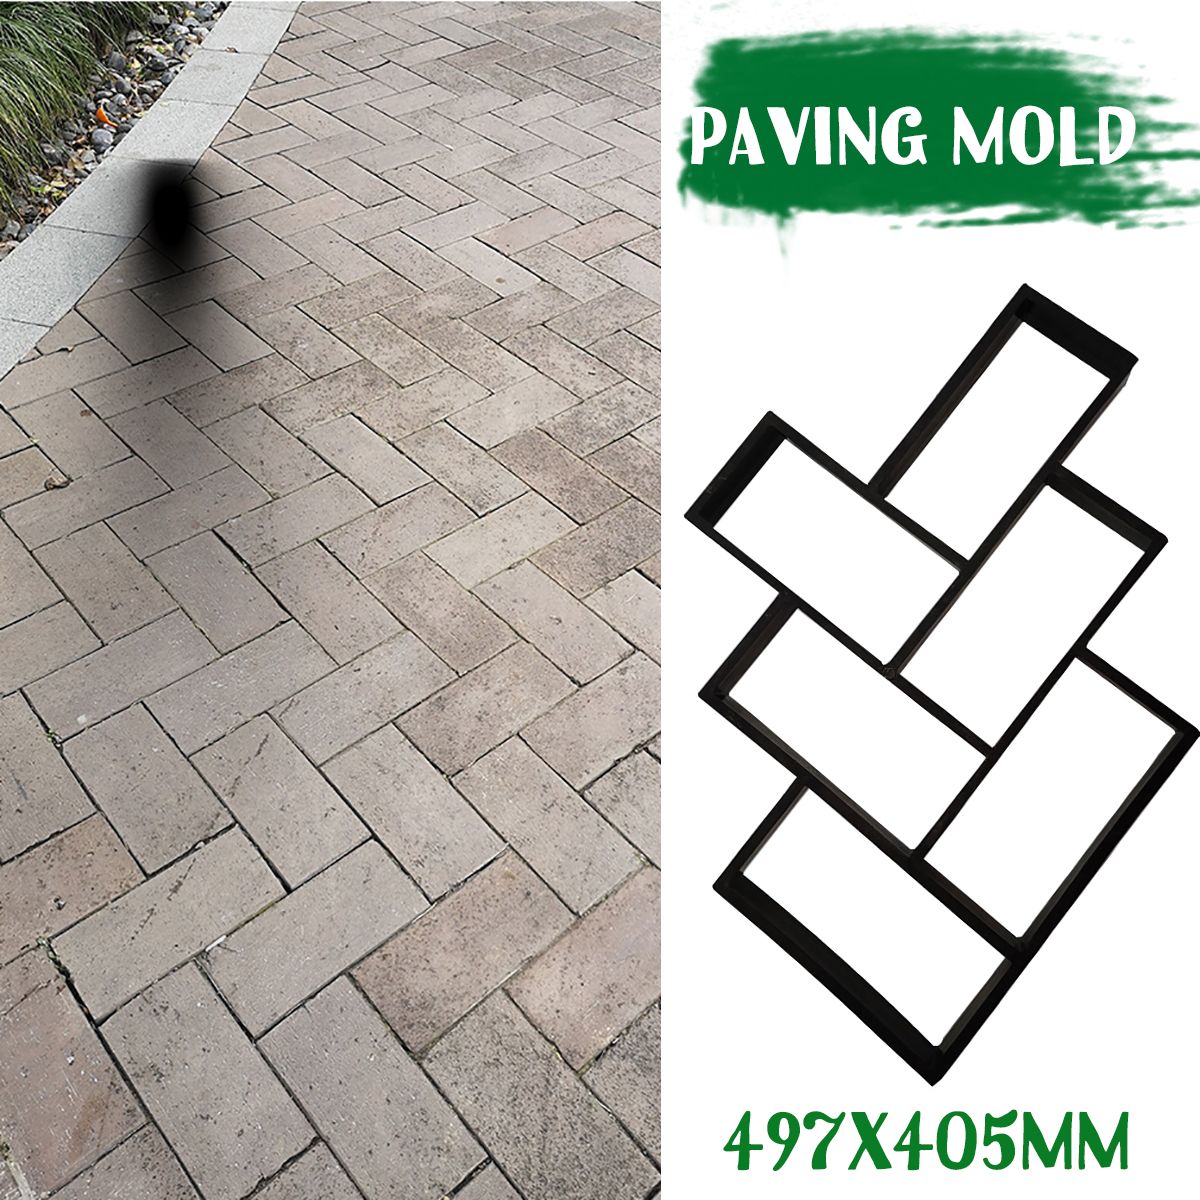 L-Cement-Brick-Stone-Road-Paver-Maker-Garden-Walk-Pavement-Mold-Path-DIY-Paving-1561531